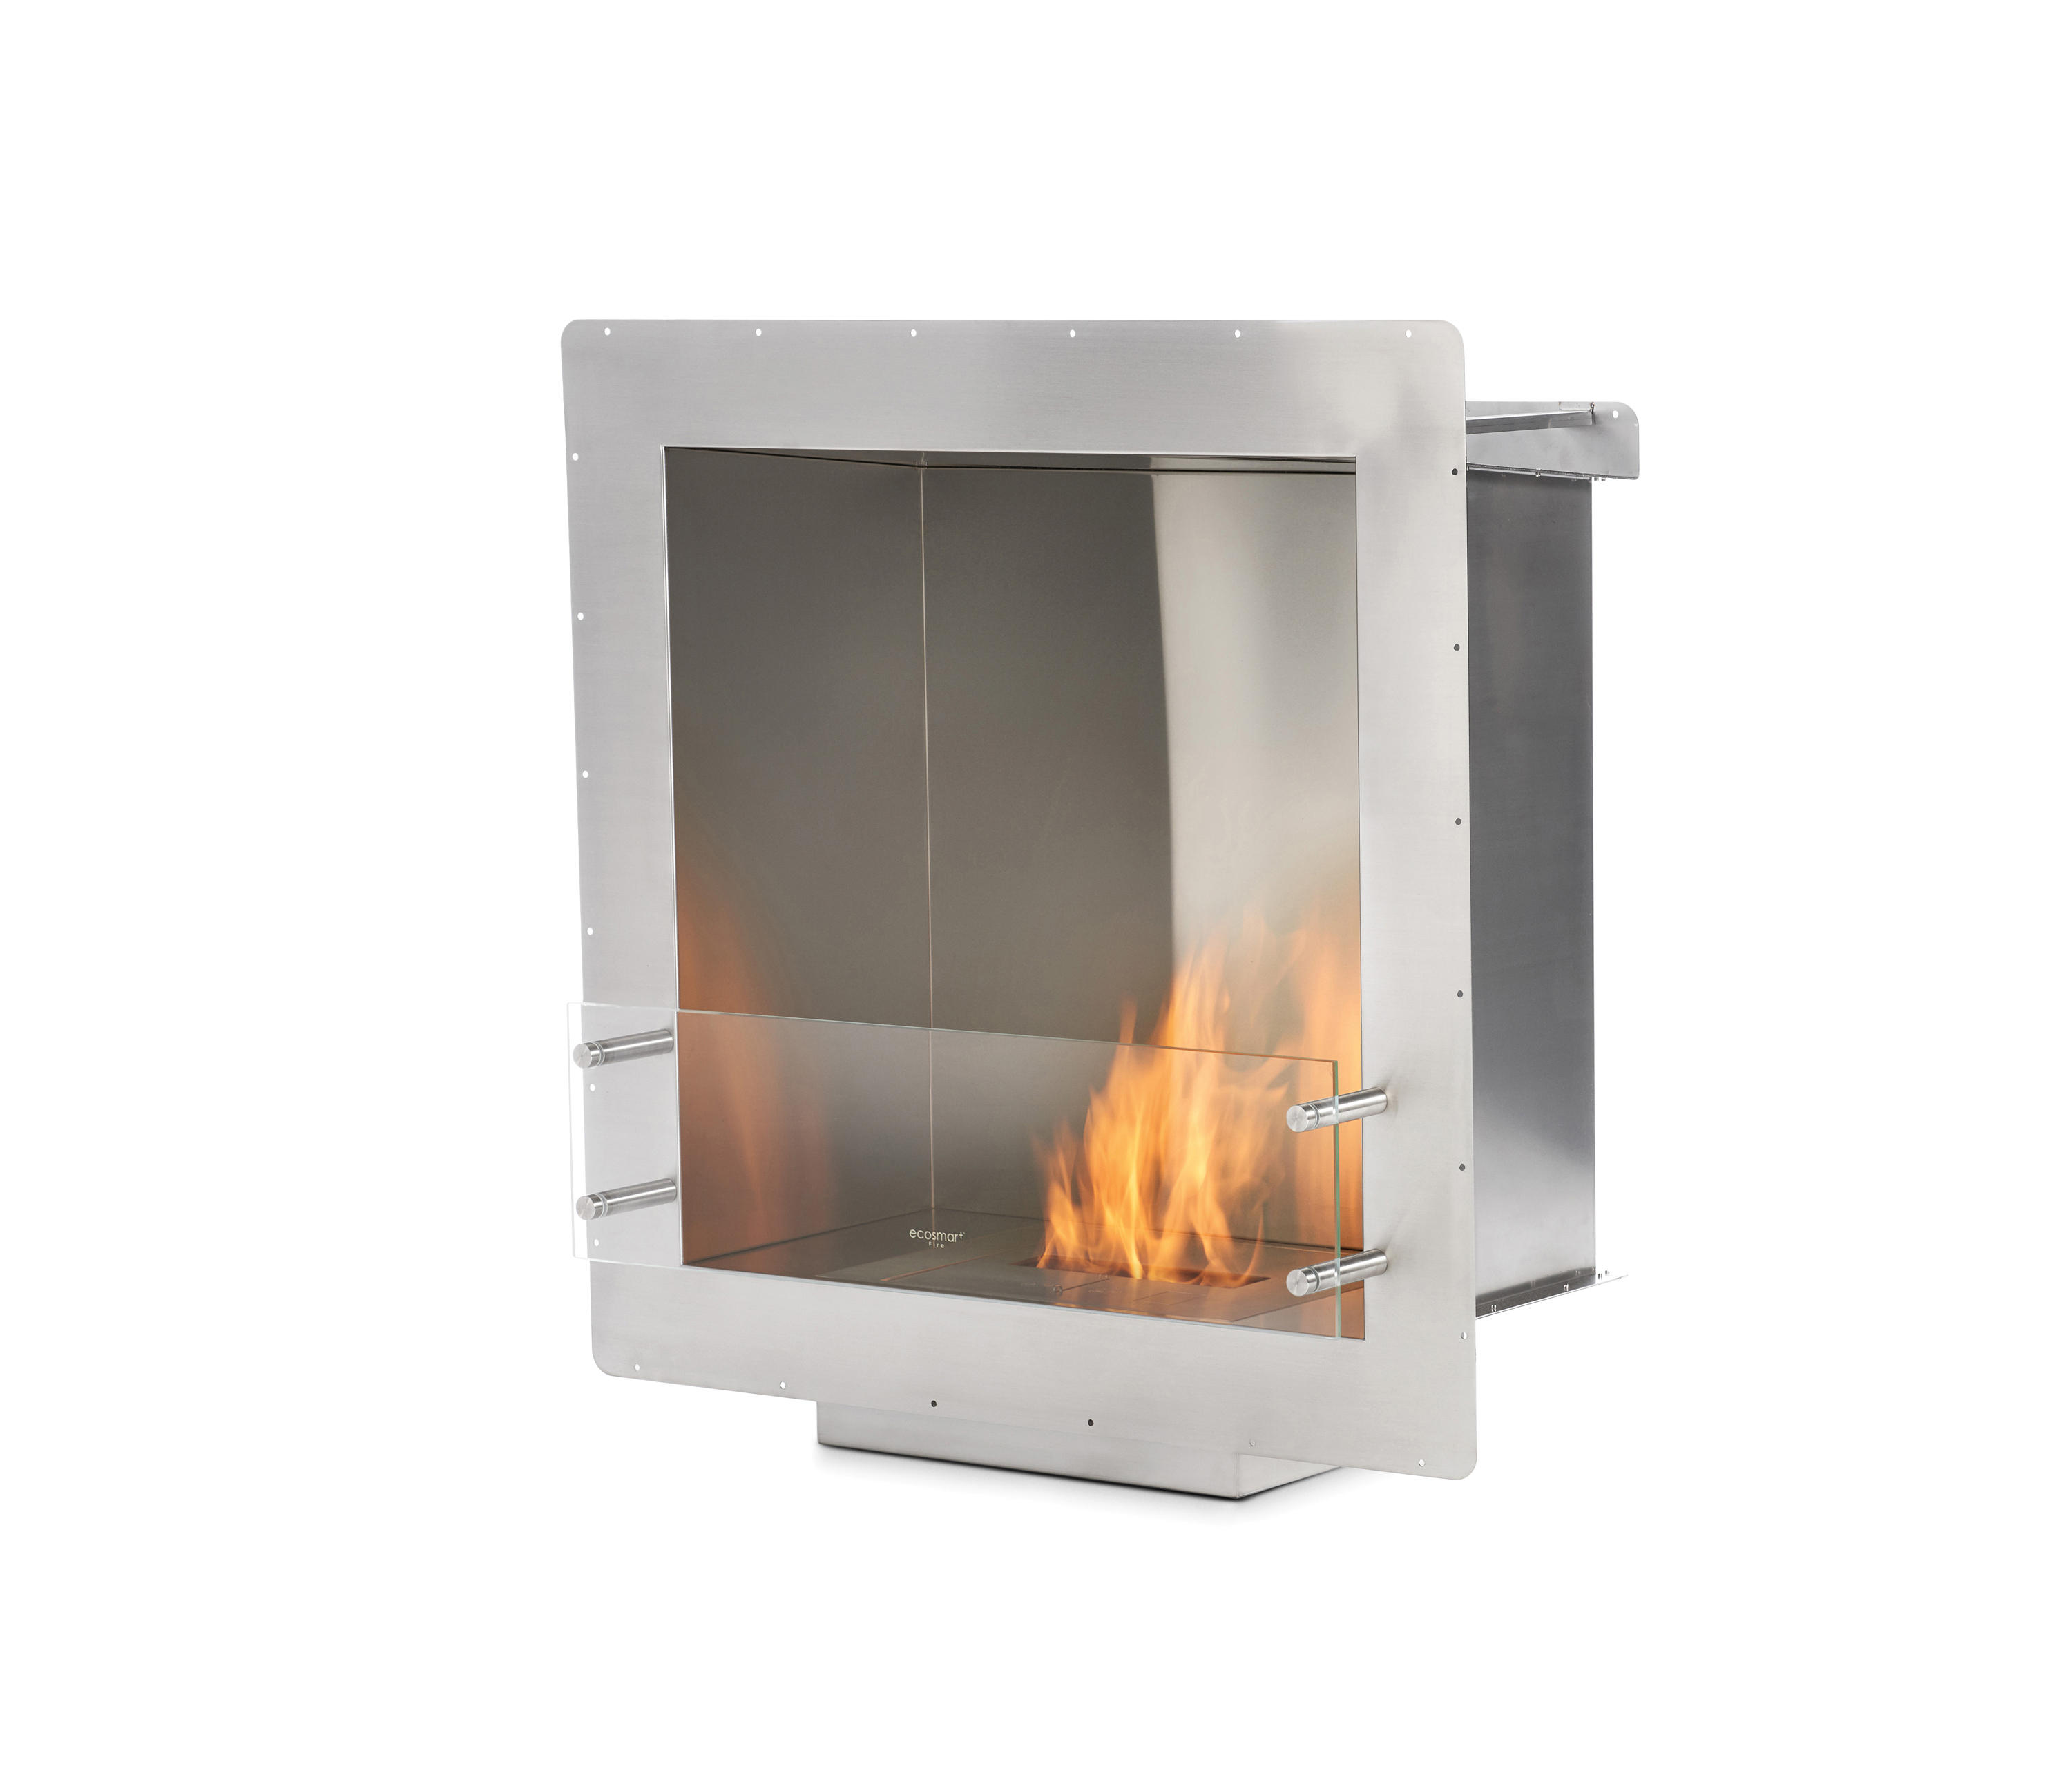 FIREBOX 650SS - Ethanol burner inserts from EcoSmart™ Fire | Architonic